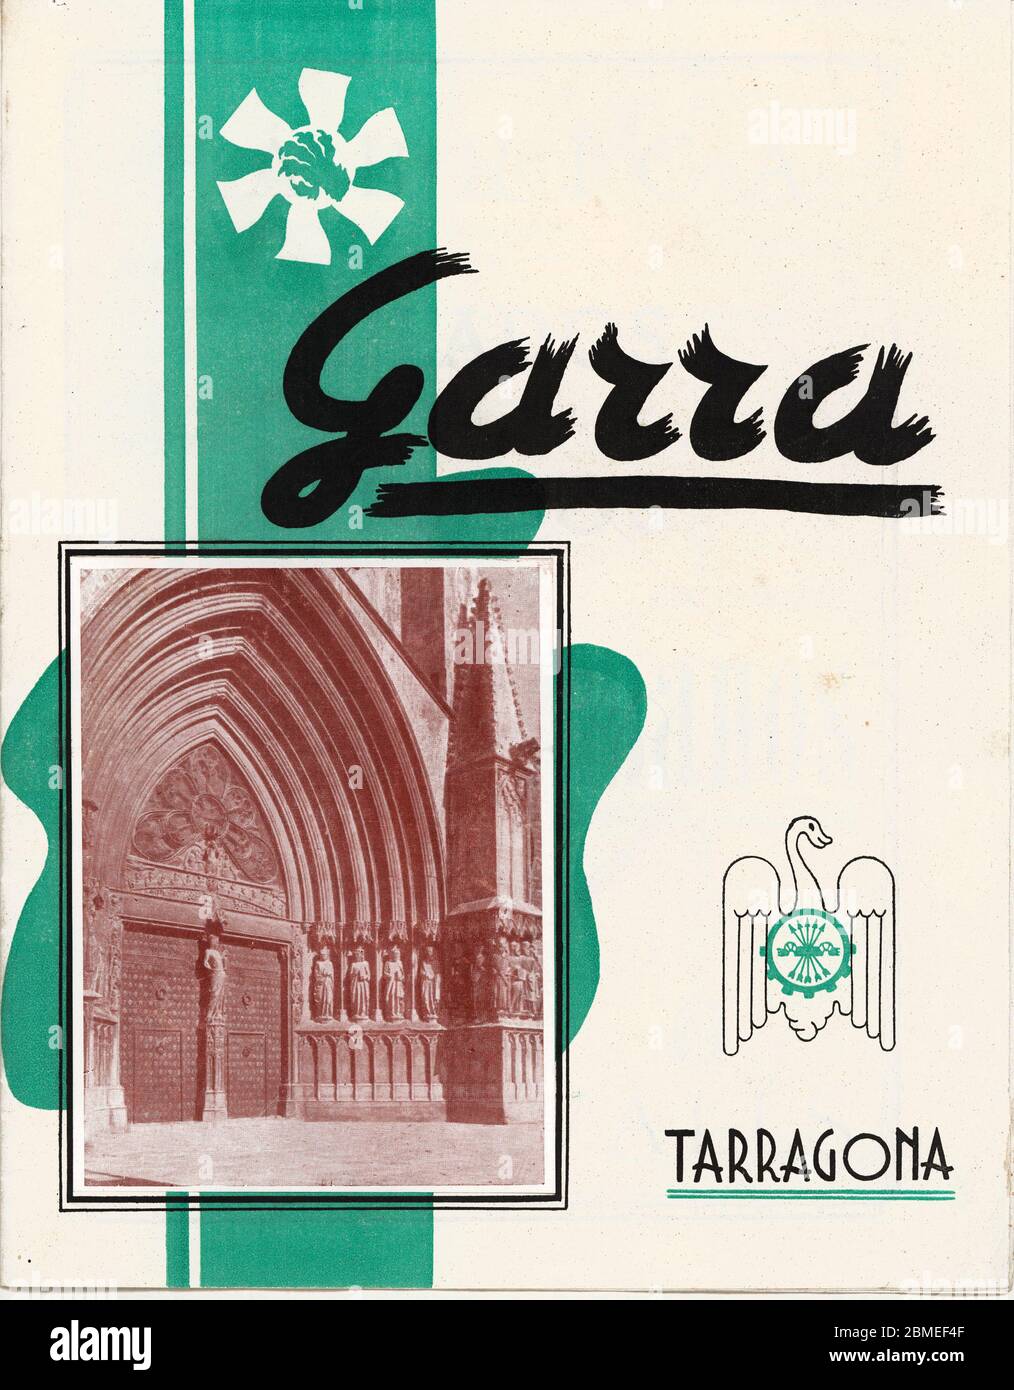 España. Portada de la revista Garra. Falange española. Tarragona. Stock Photo